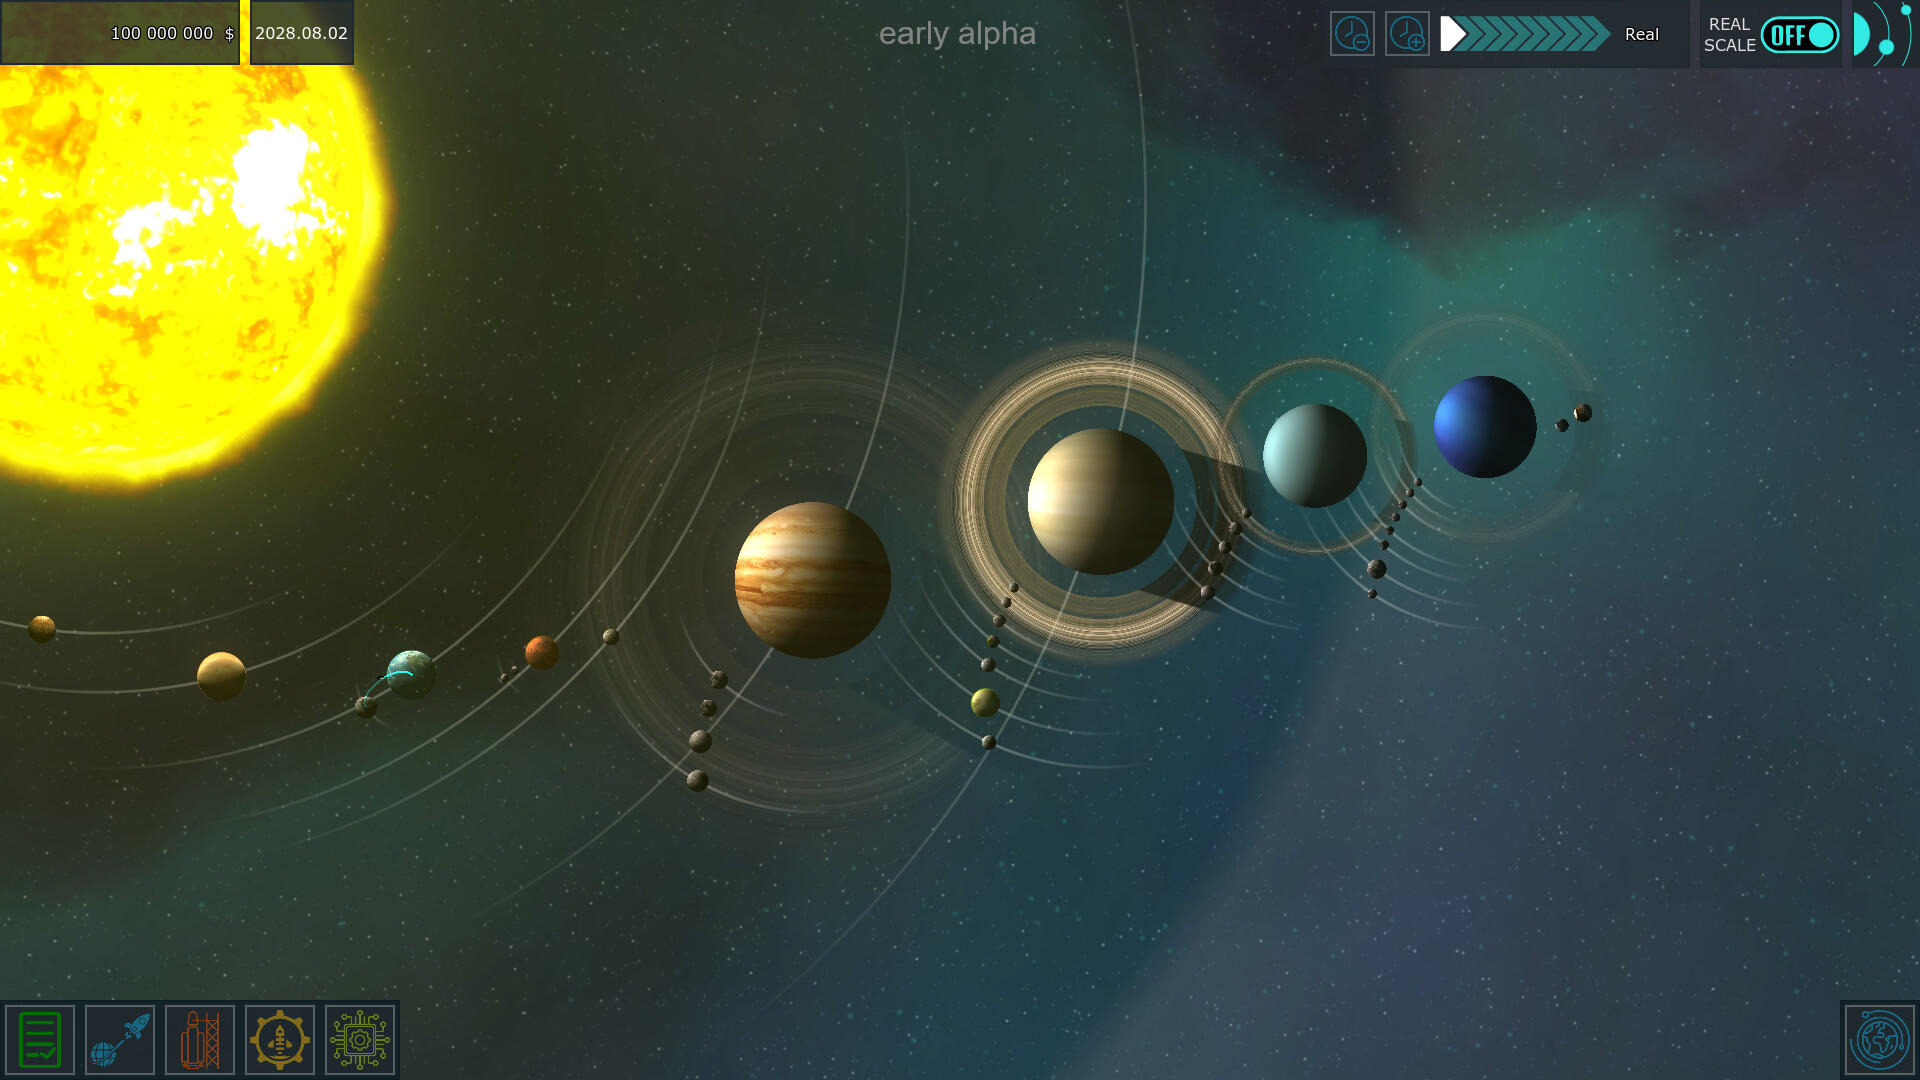 Screenshot 1 of Enterprise - Simulador de agencia espacial 